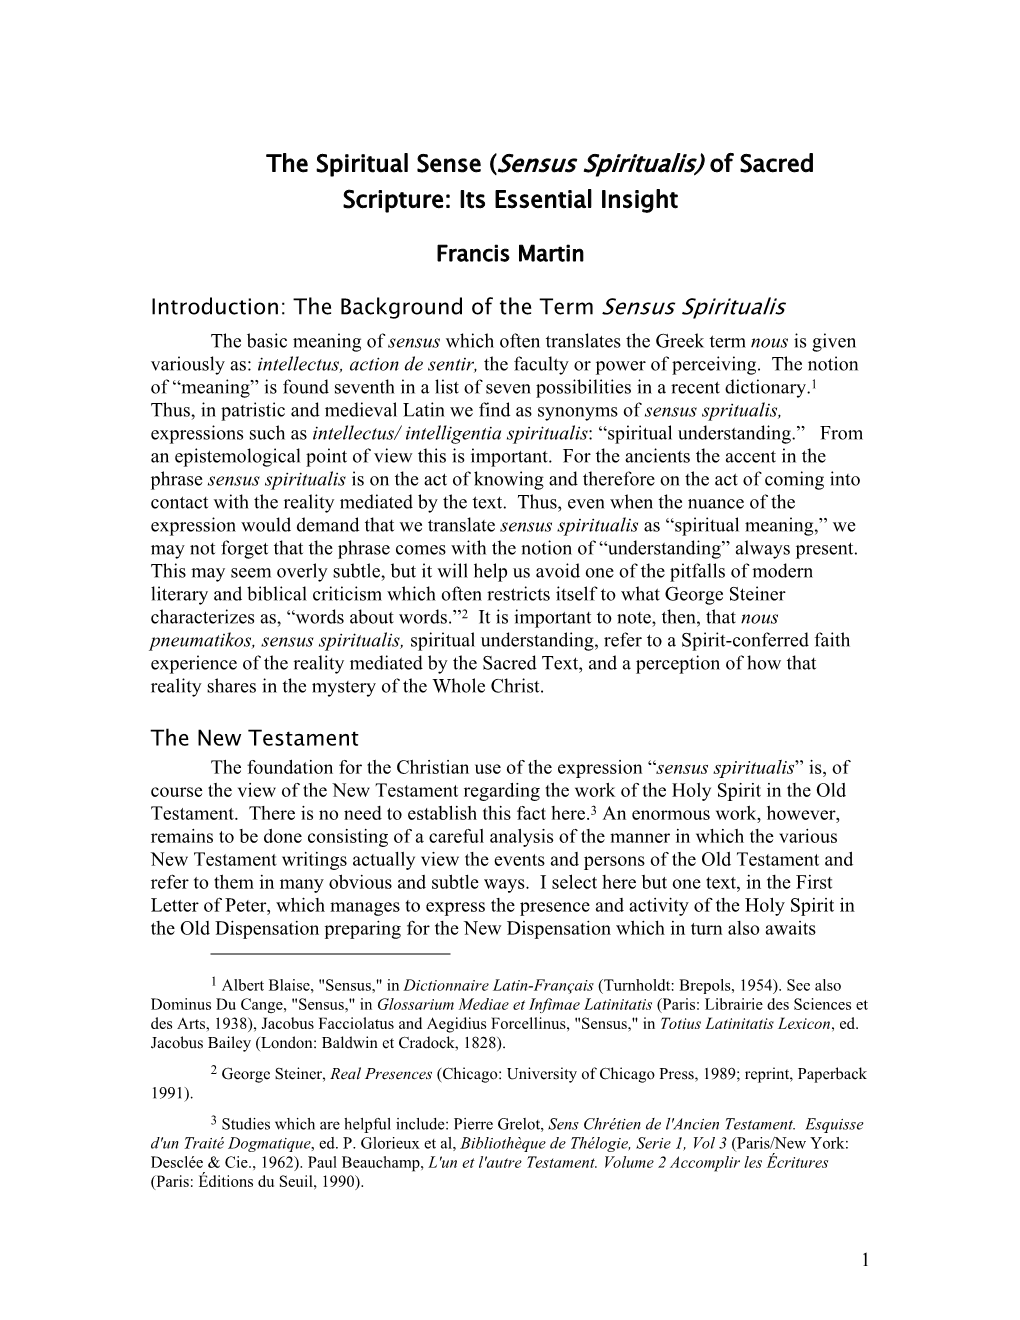 The Spiritual Sense (Sensus Spiritualis) of Sacred Scripture: Its Essential Insight